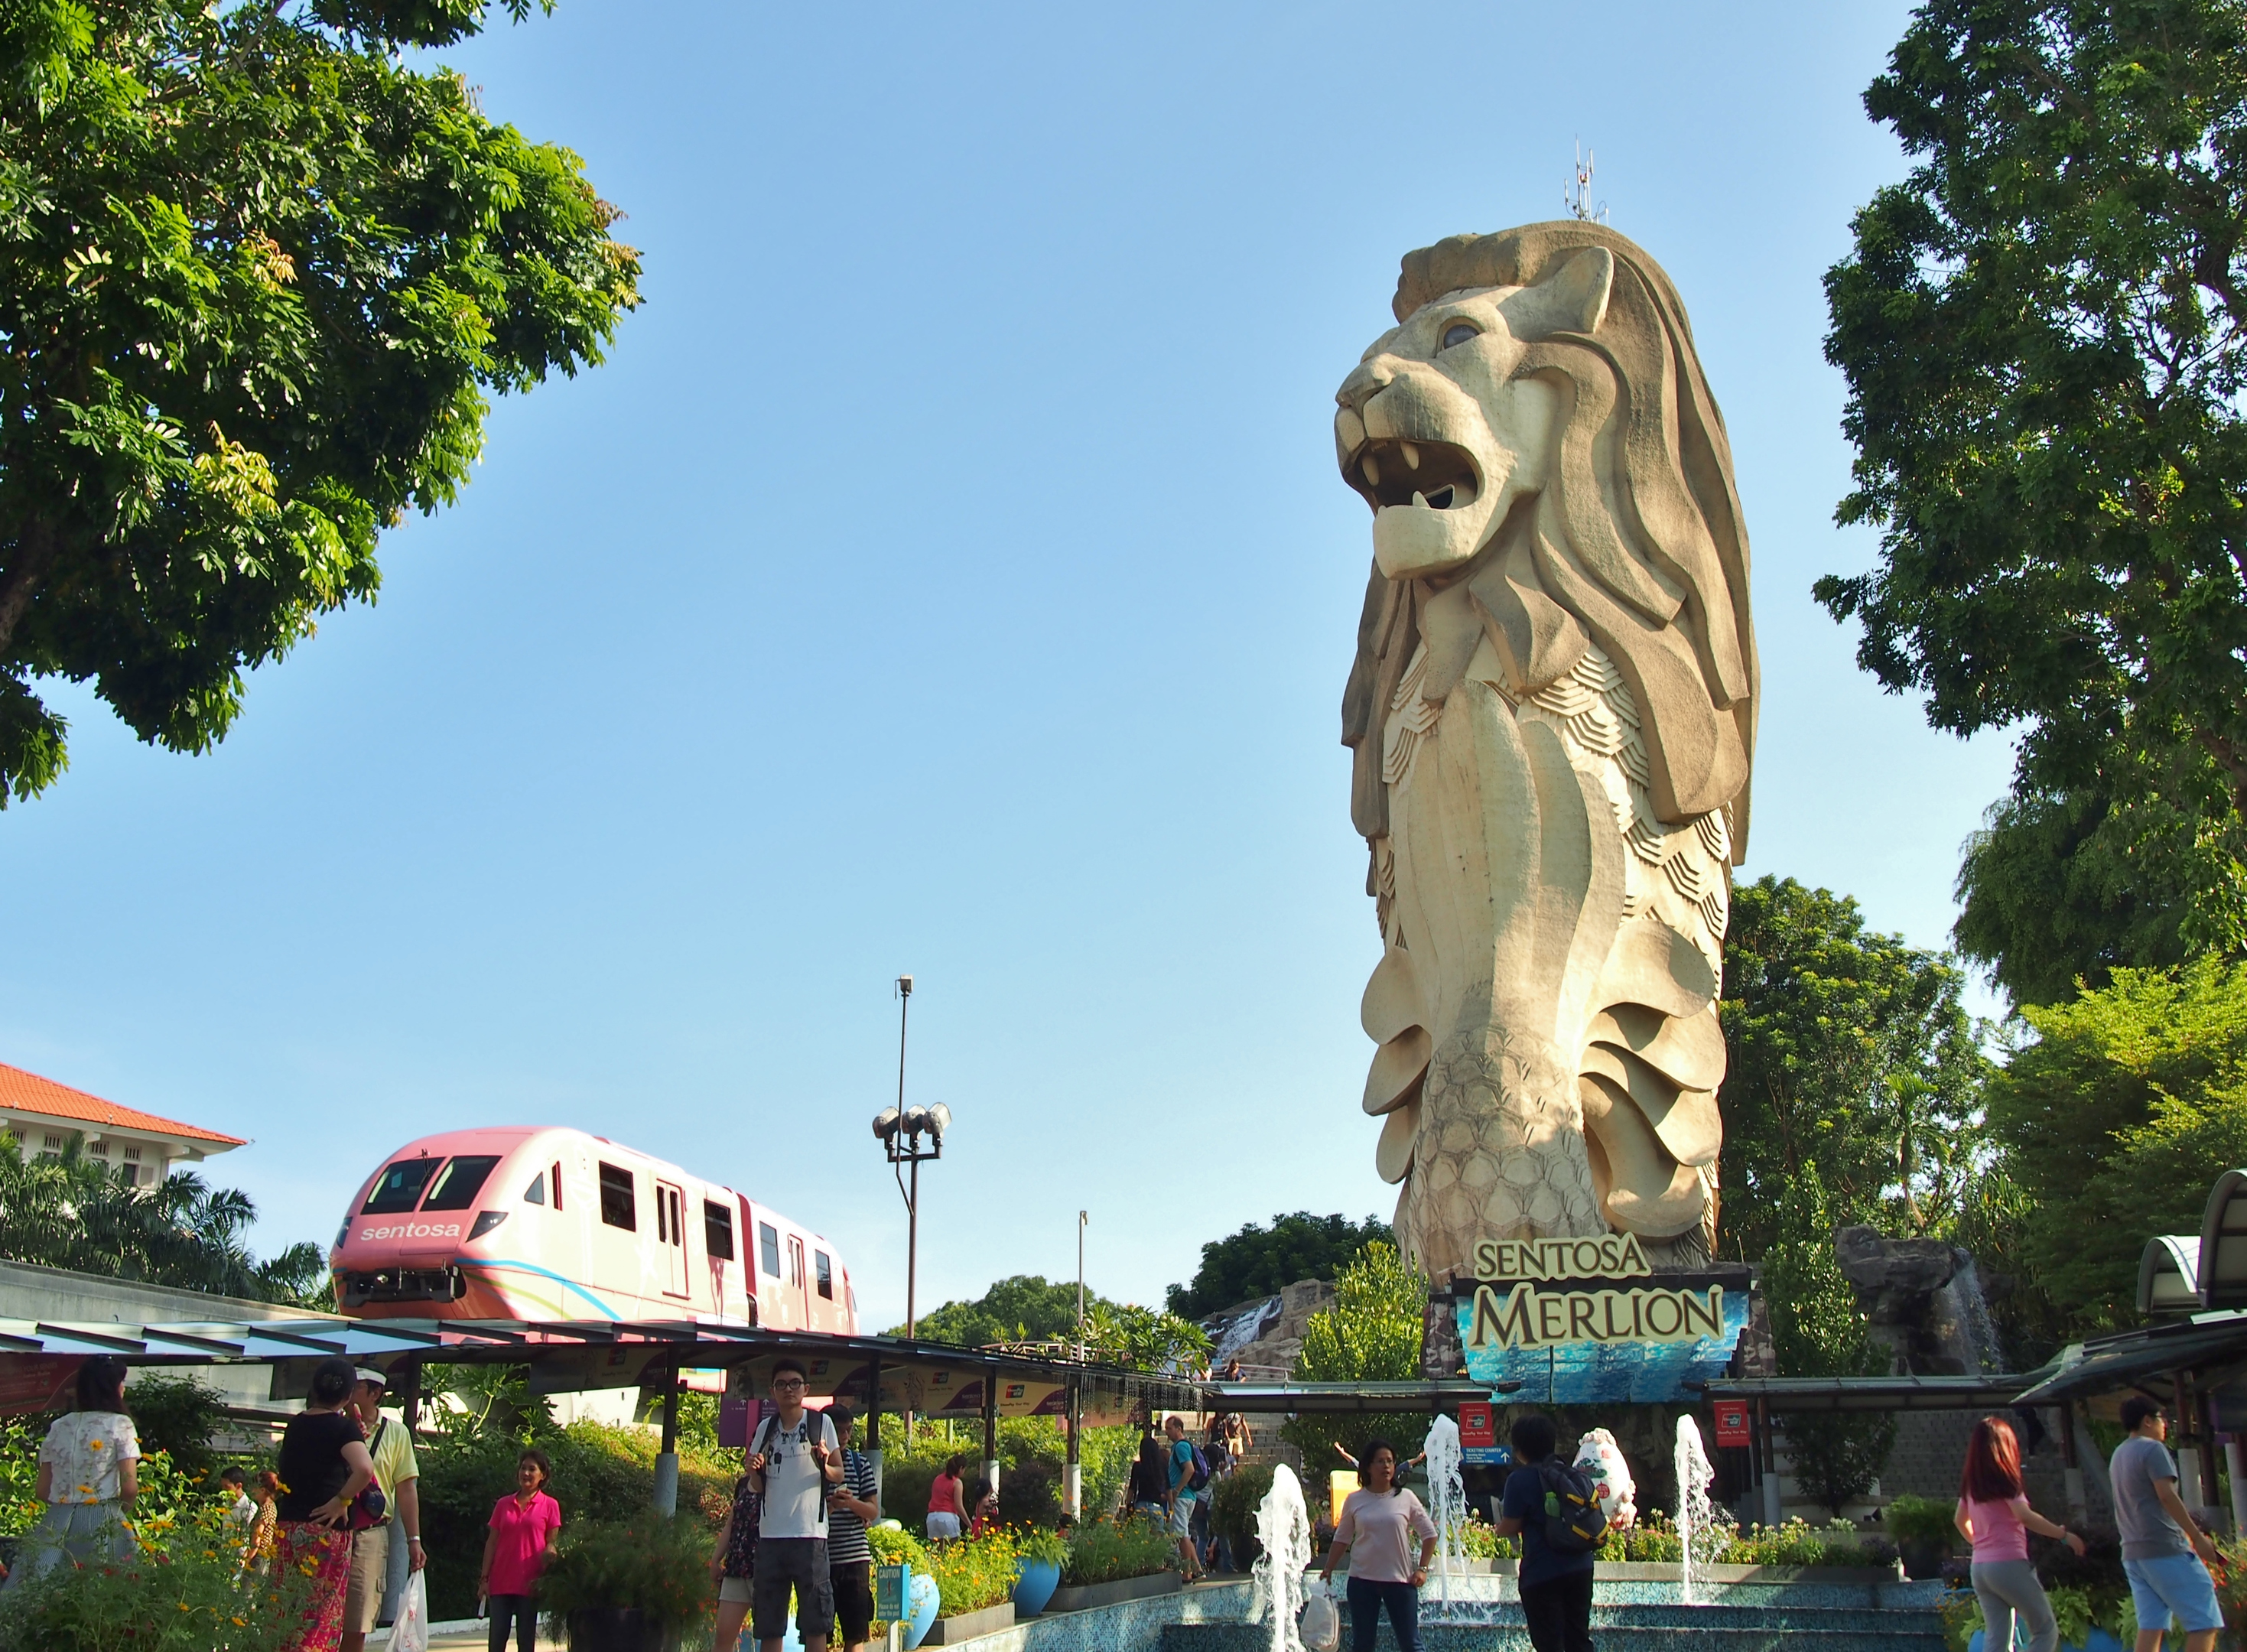 Merlion statue at Sentosa Merlion park in Sentosa island, Singapore (iStock)